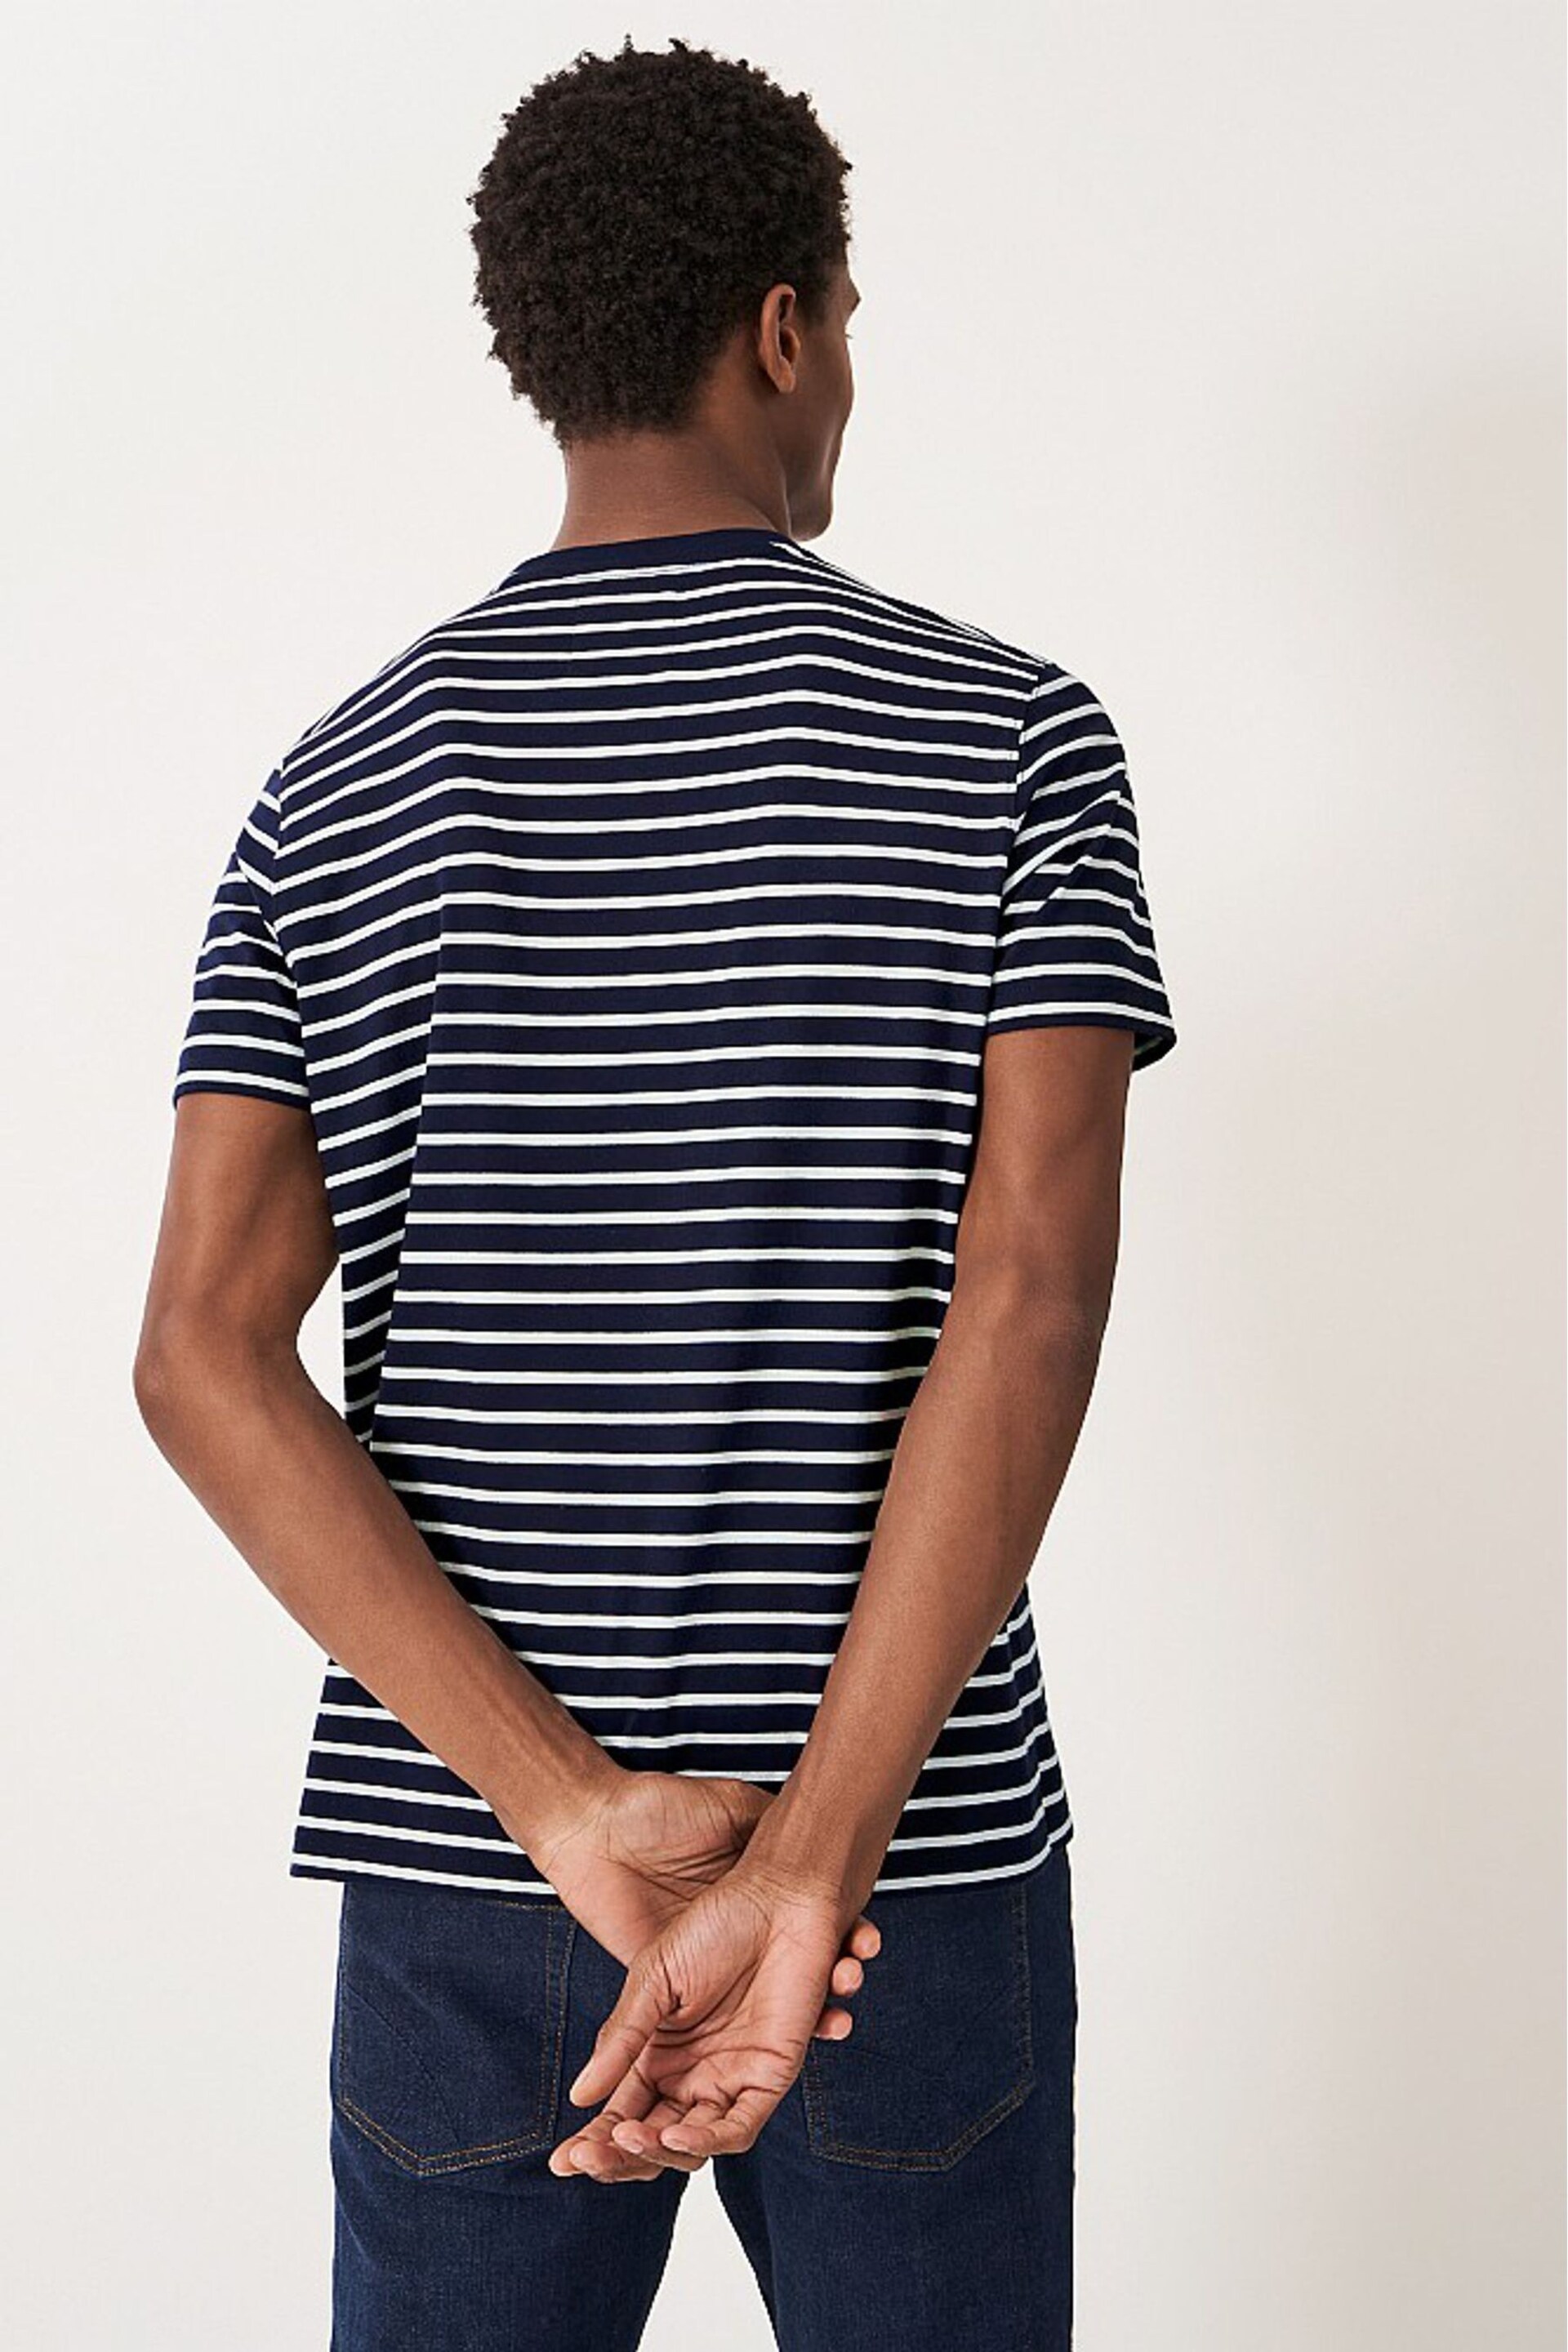 Crew Clothing Breton Stripe T-Shirt - Image 2 of 4